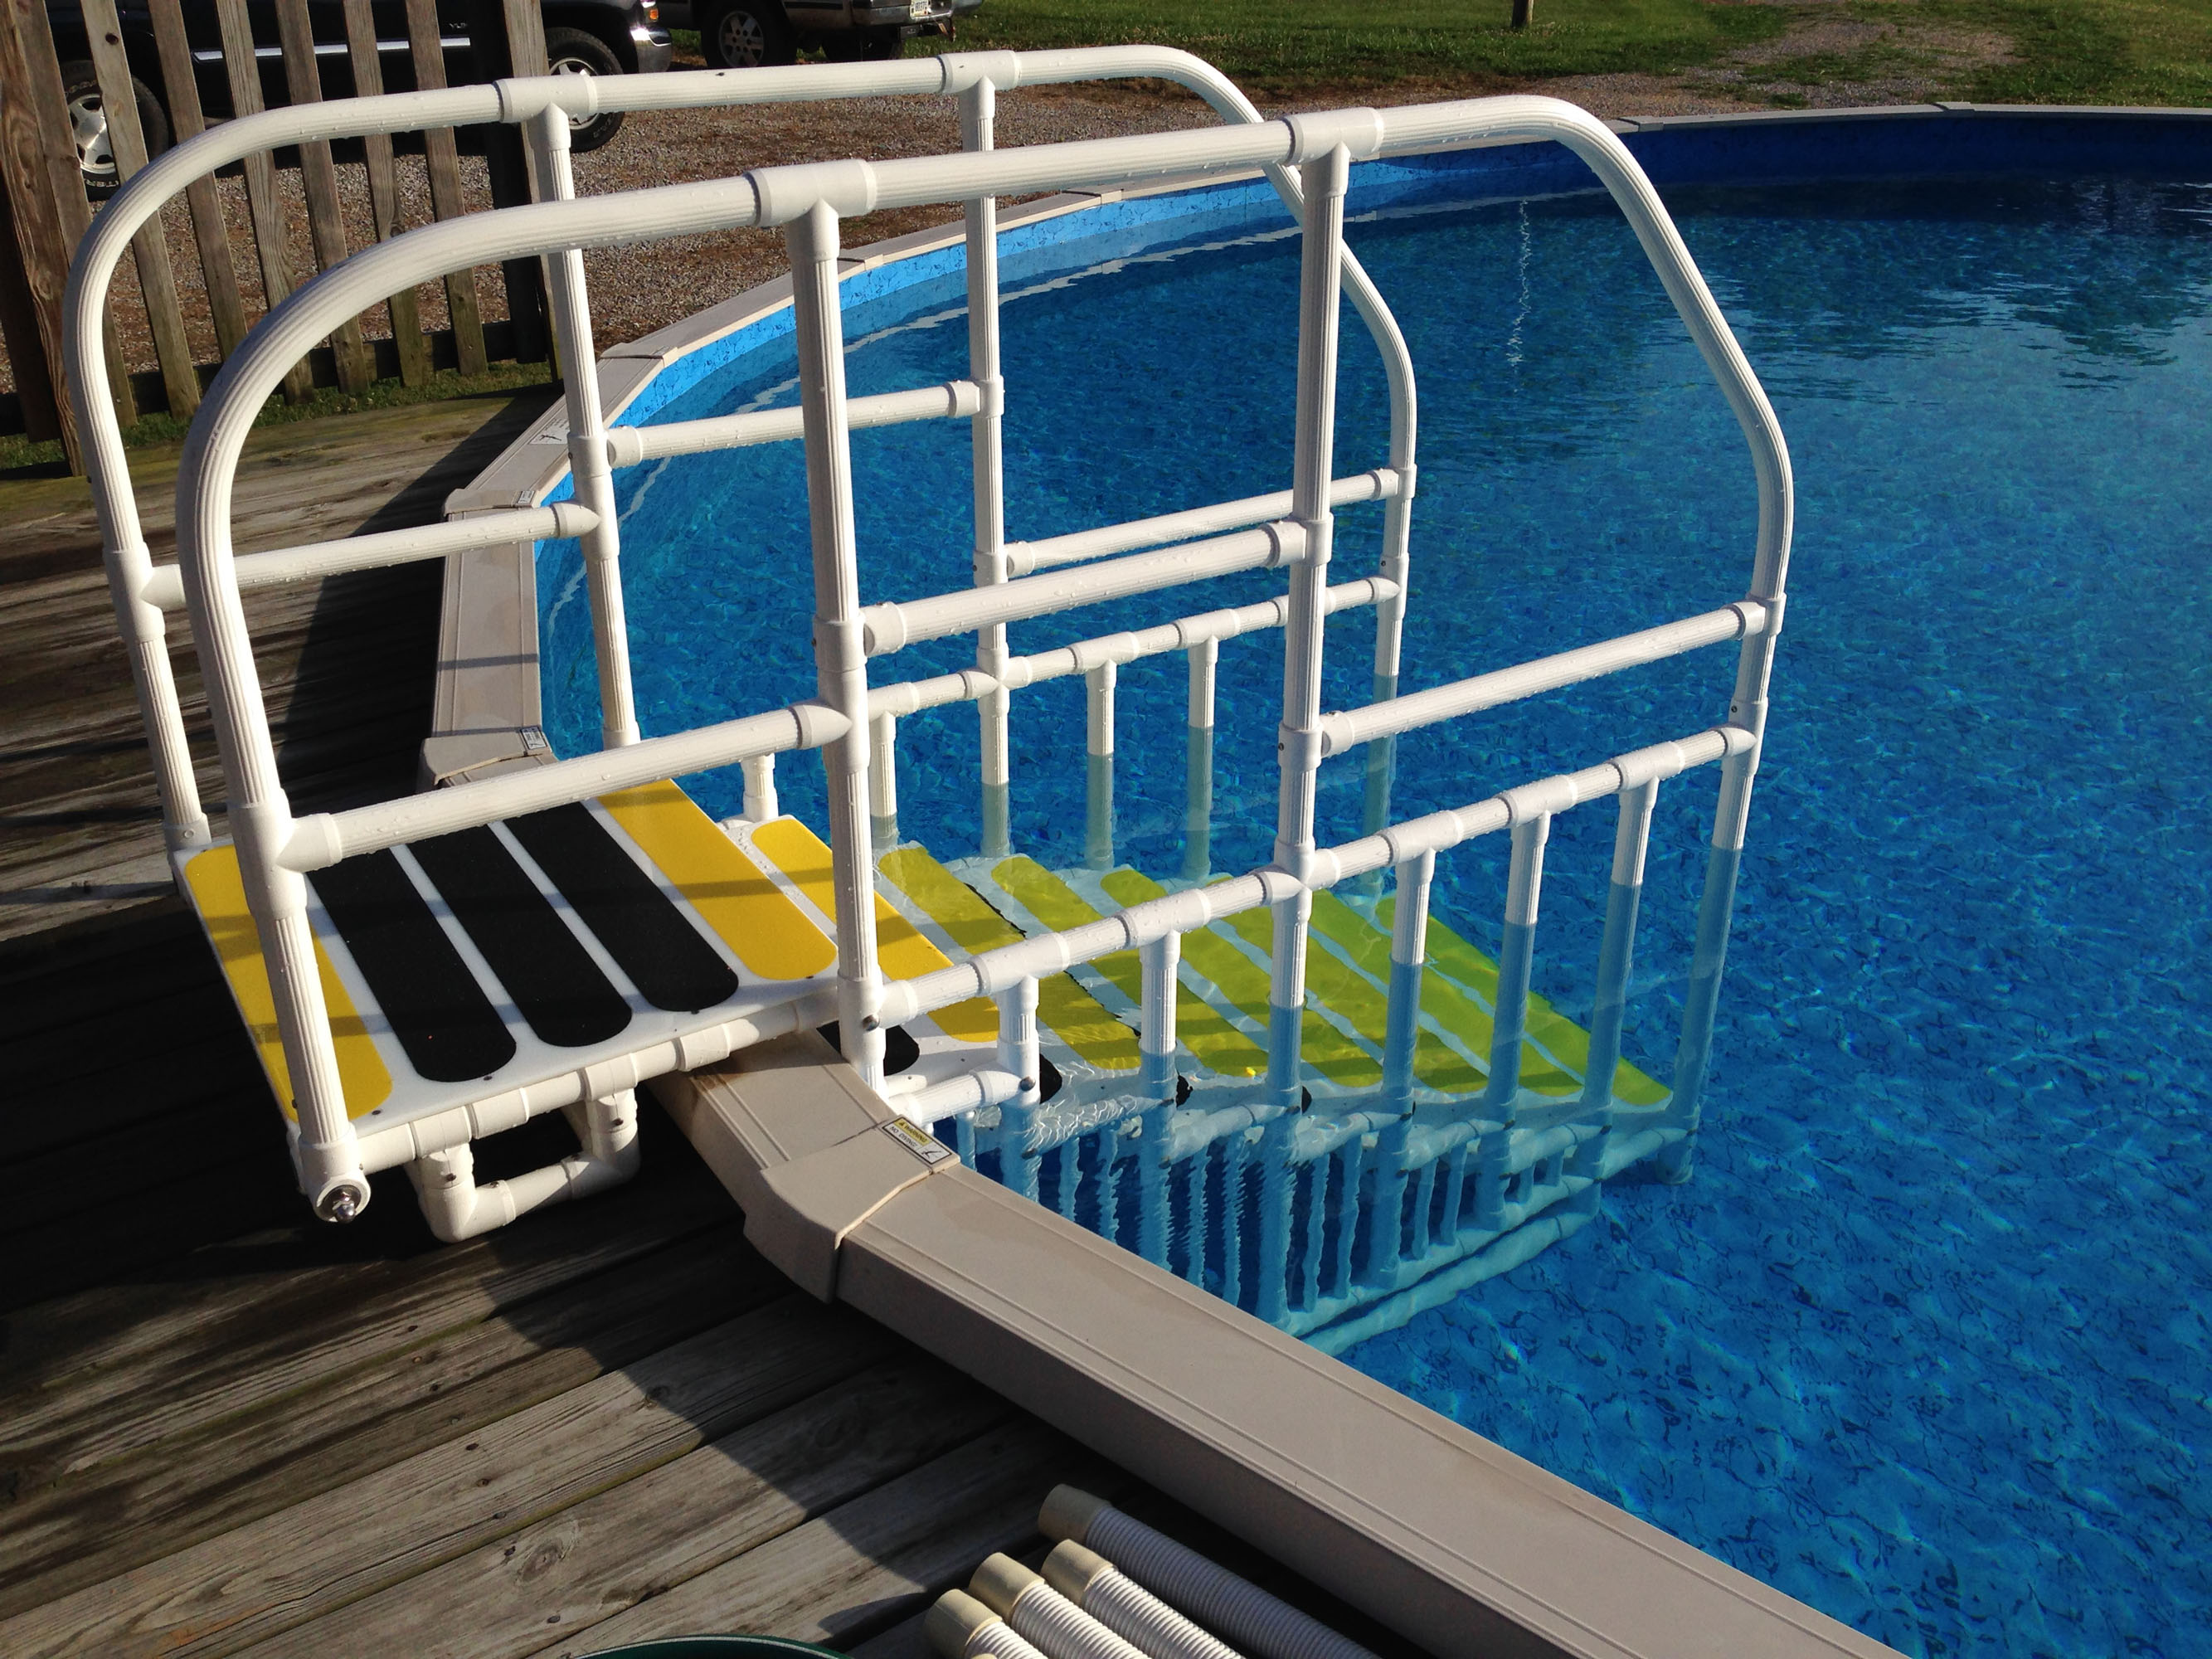 Pool ladder above ground pool